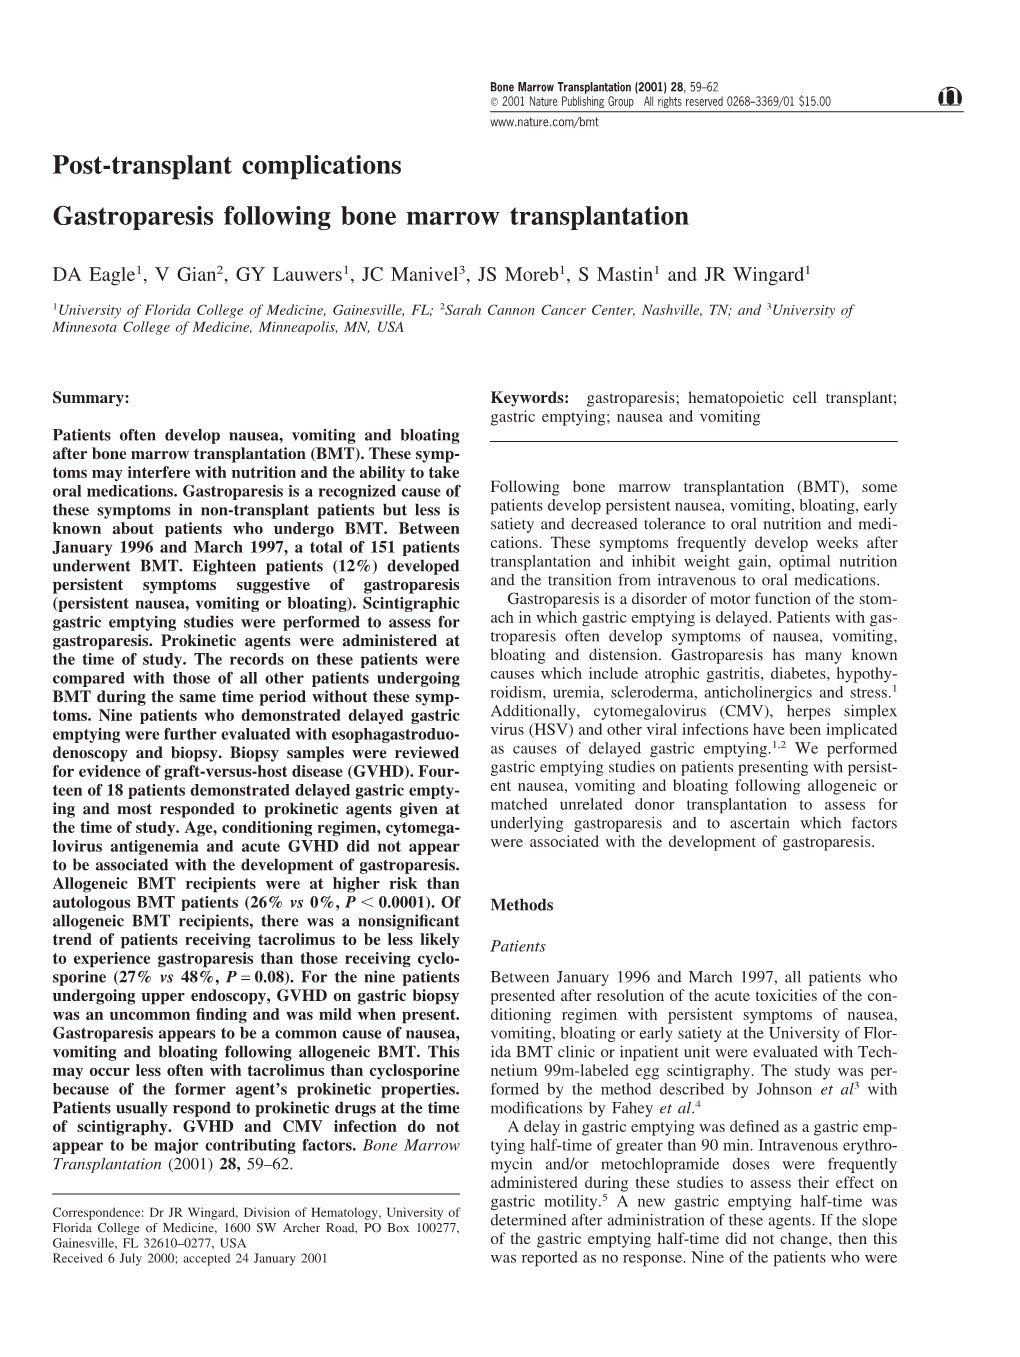 Post-Transplant Complications Gastroparesis Following Bone Marrow Transplantation